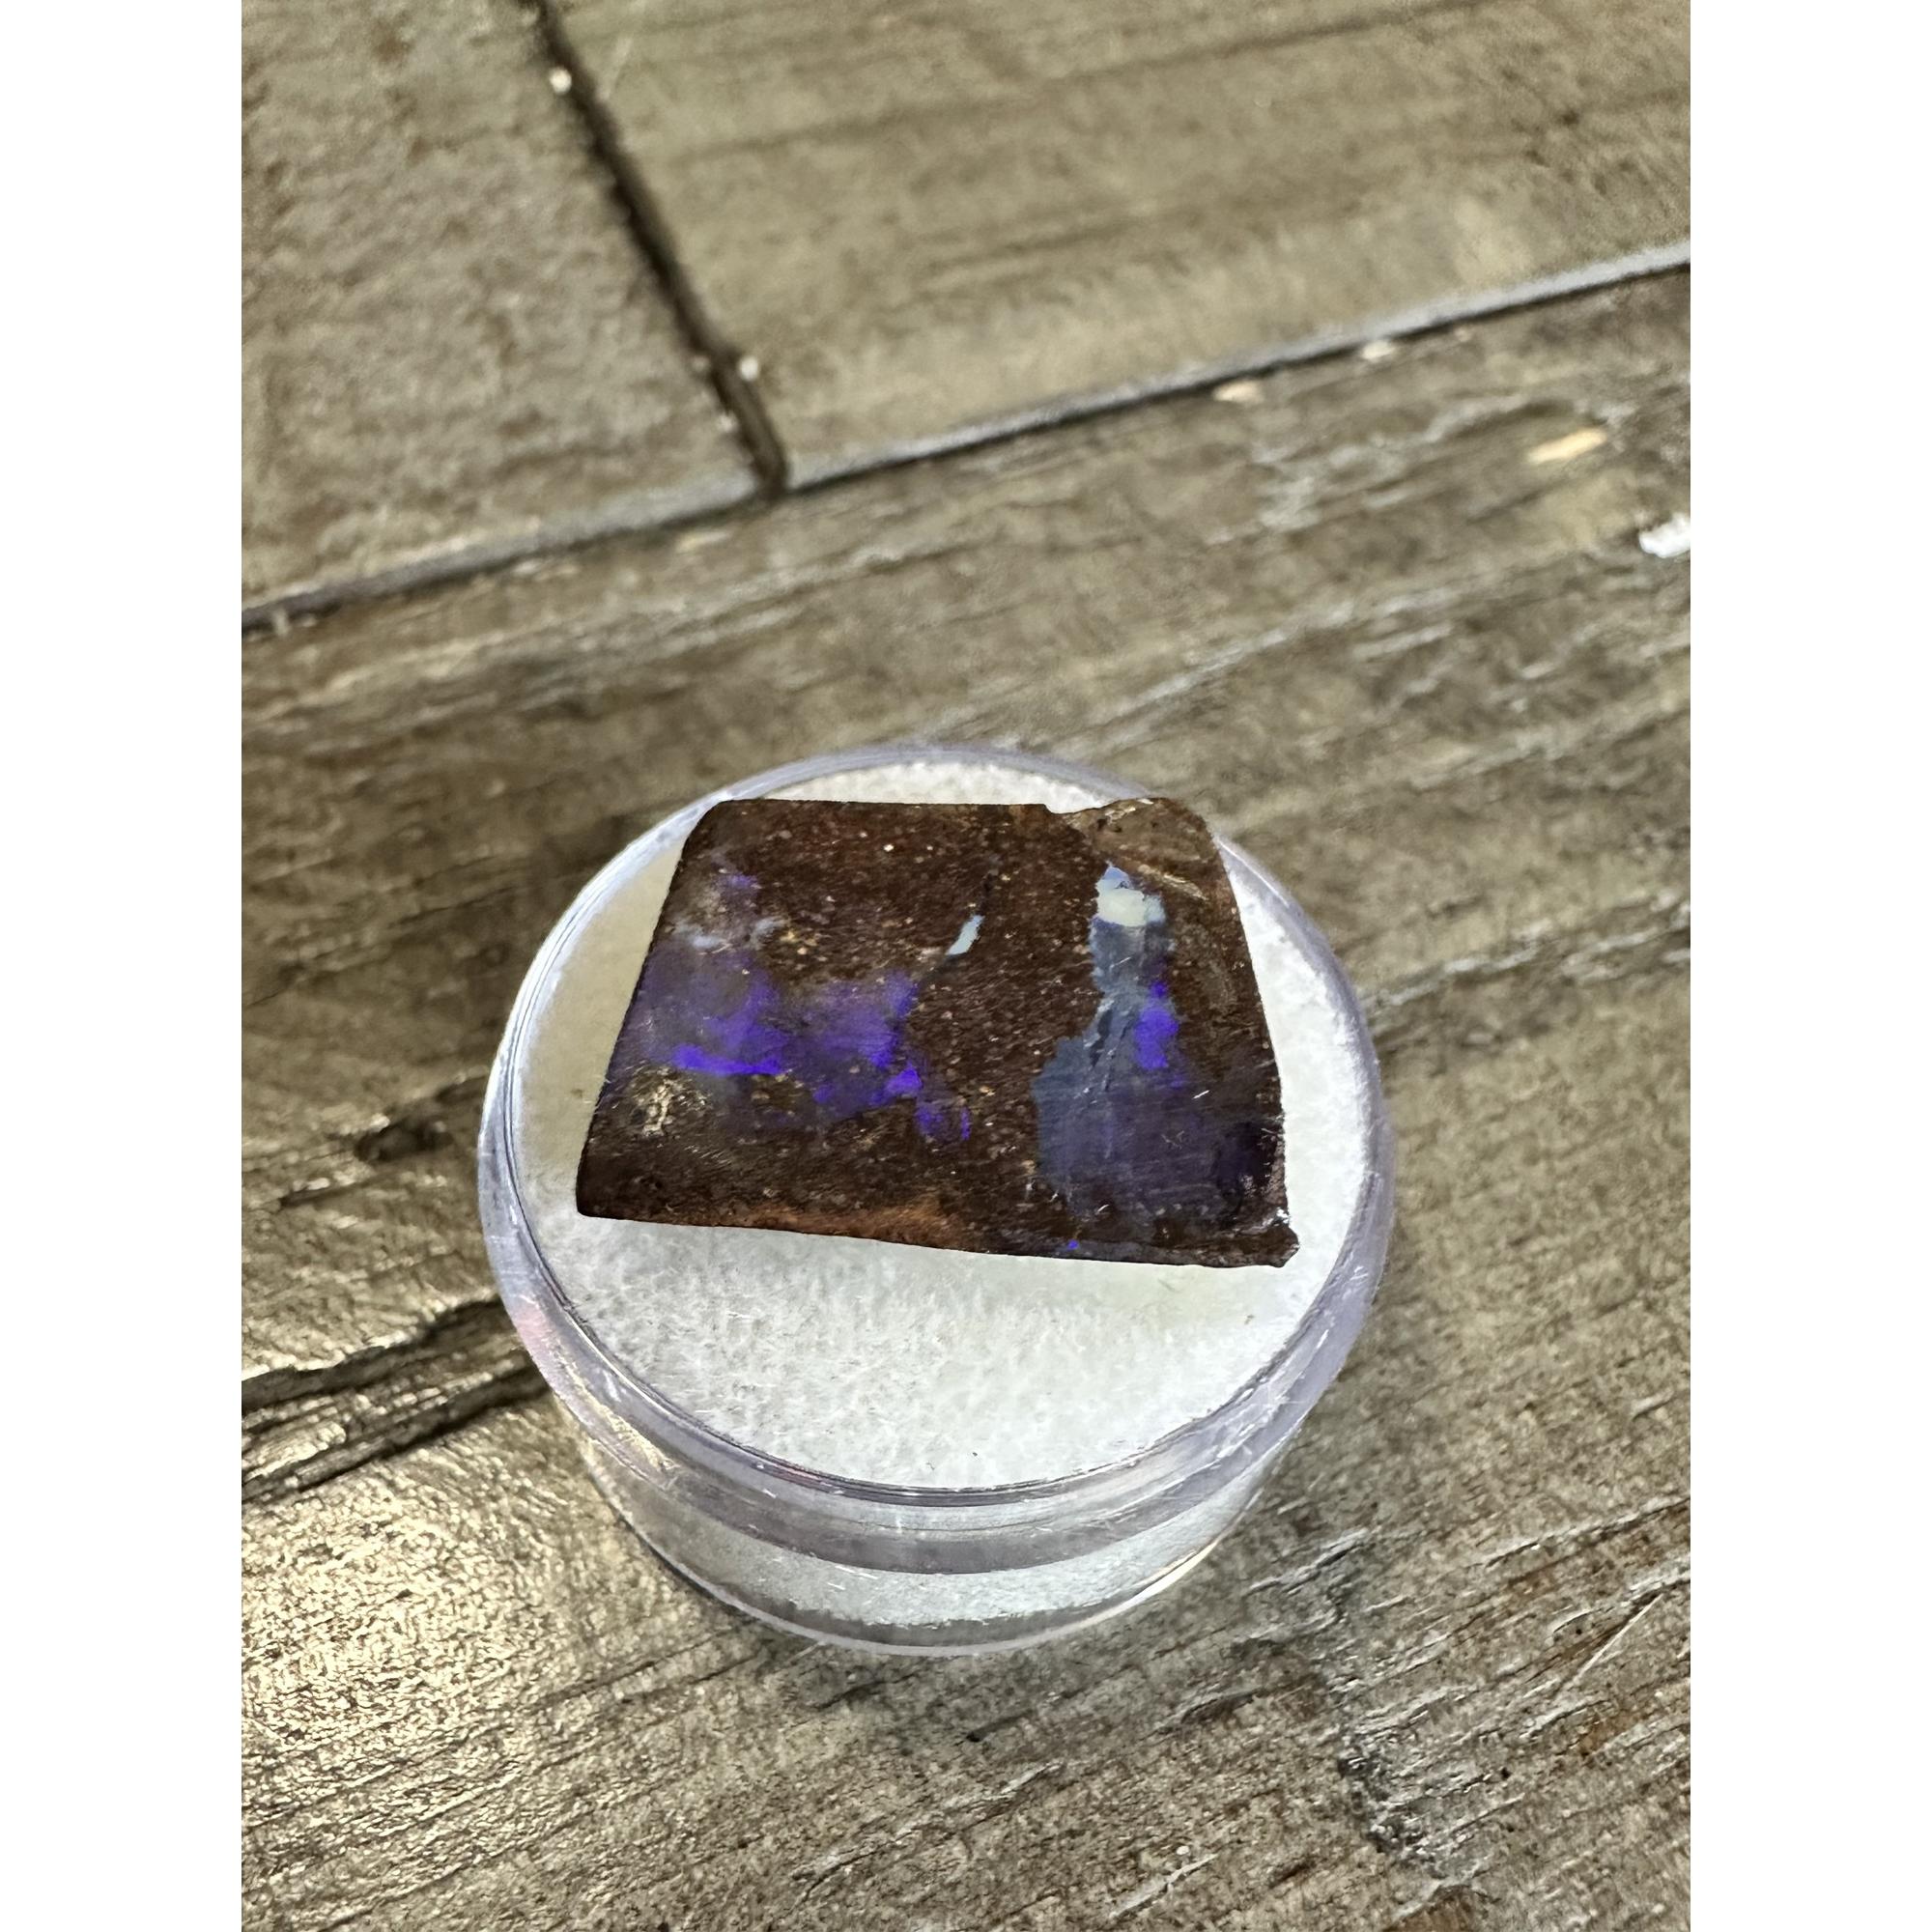 Opal, boulder, Australia, dark color matrix Prehistoric Online